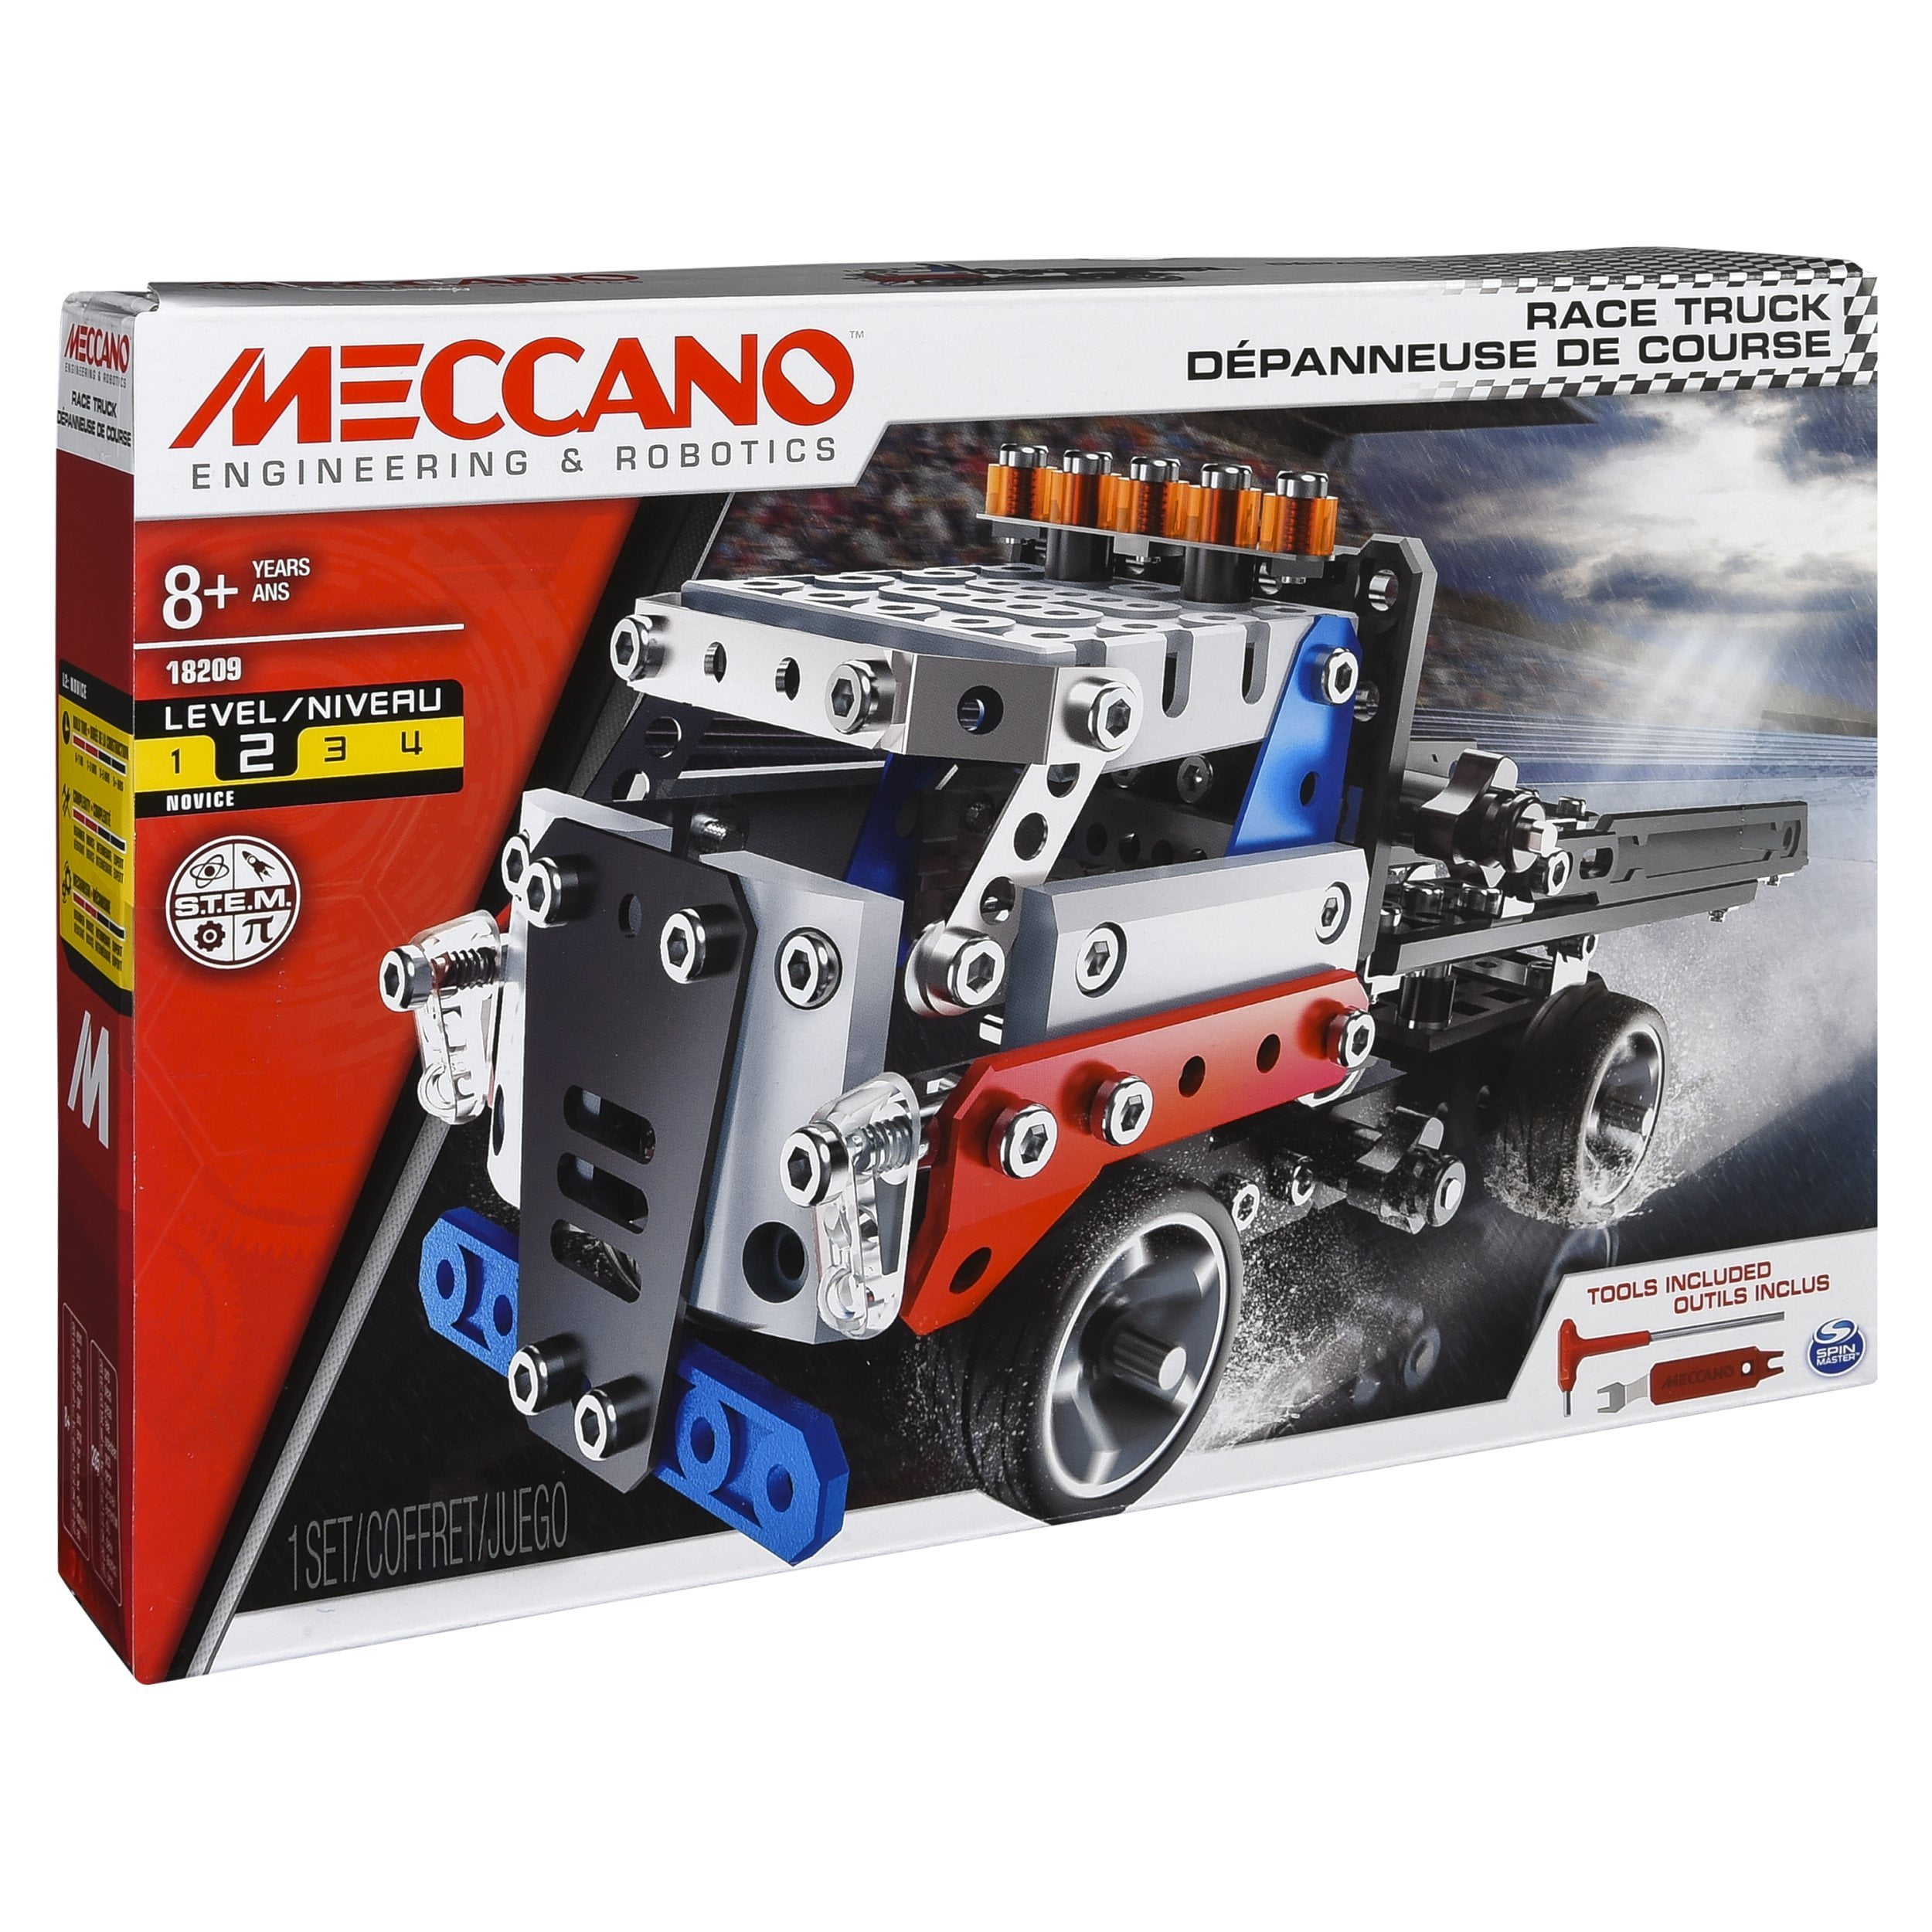 Meccano-Erector Junior, Truckin' Tractor, 4 Model Building Kit